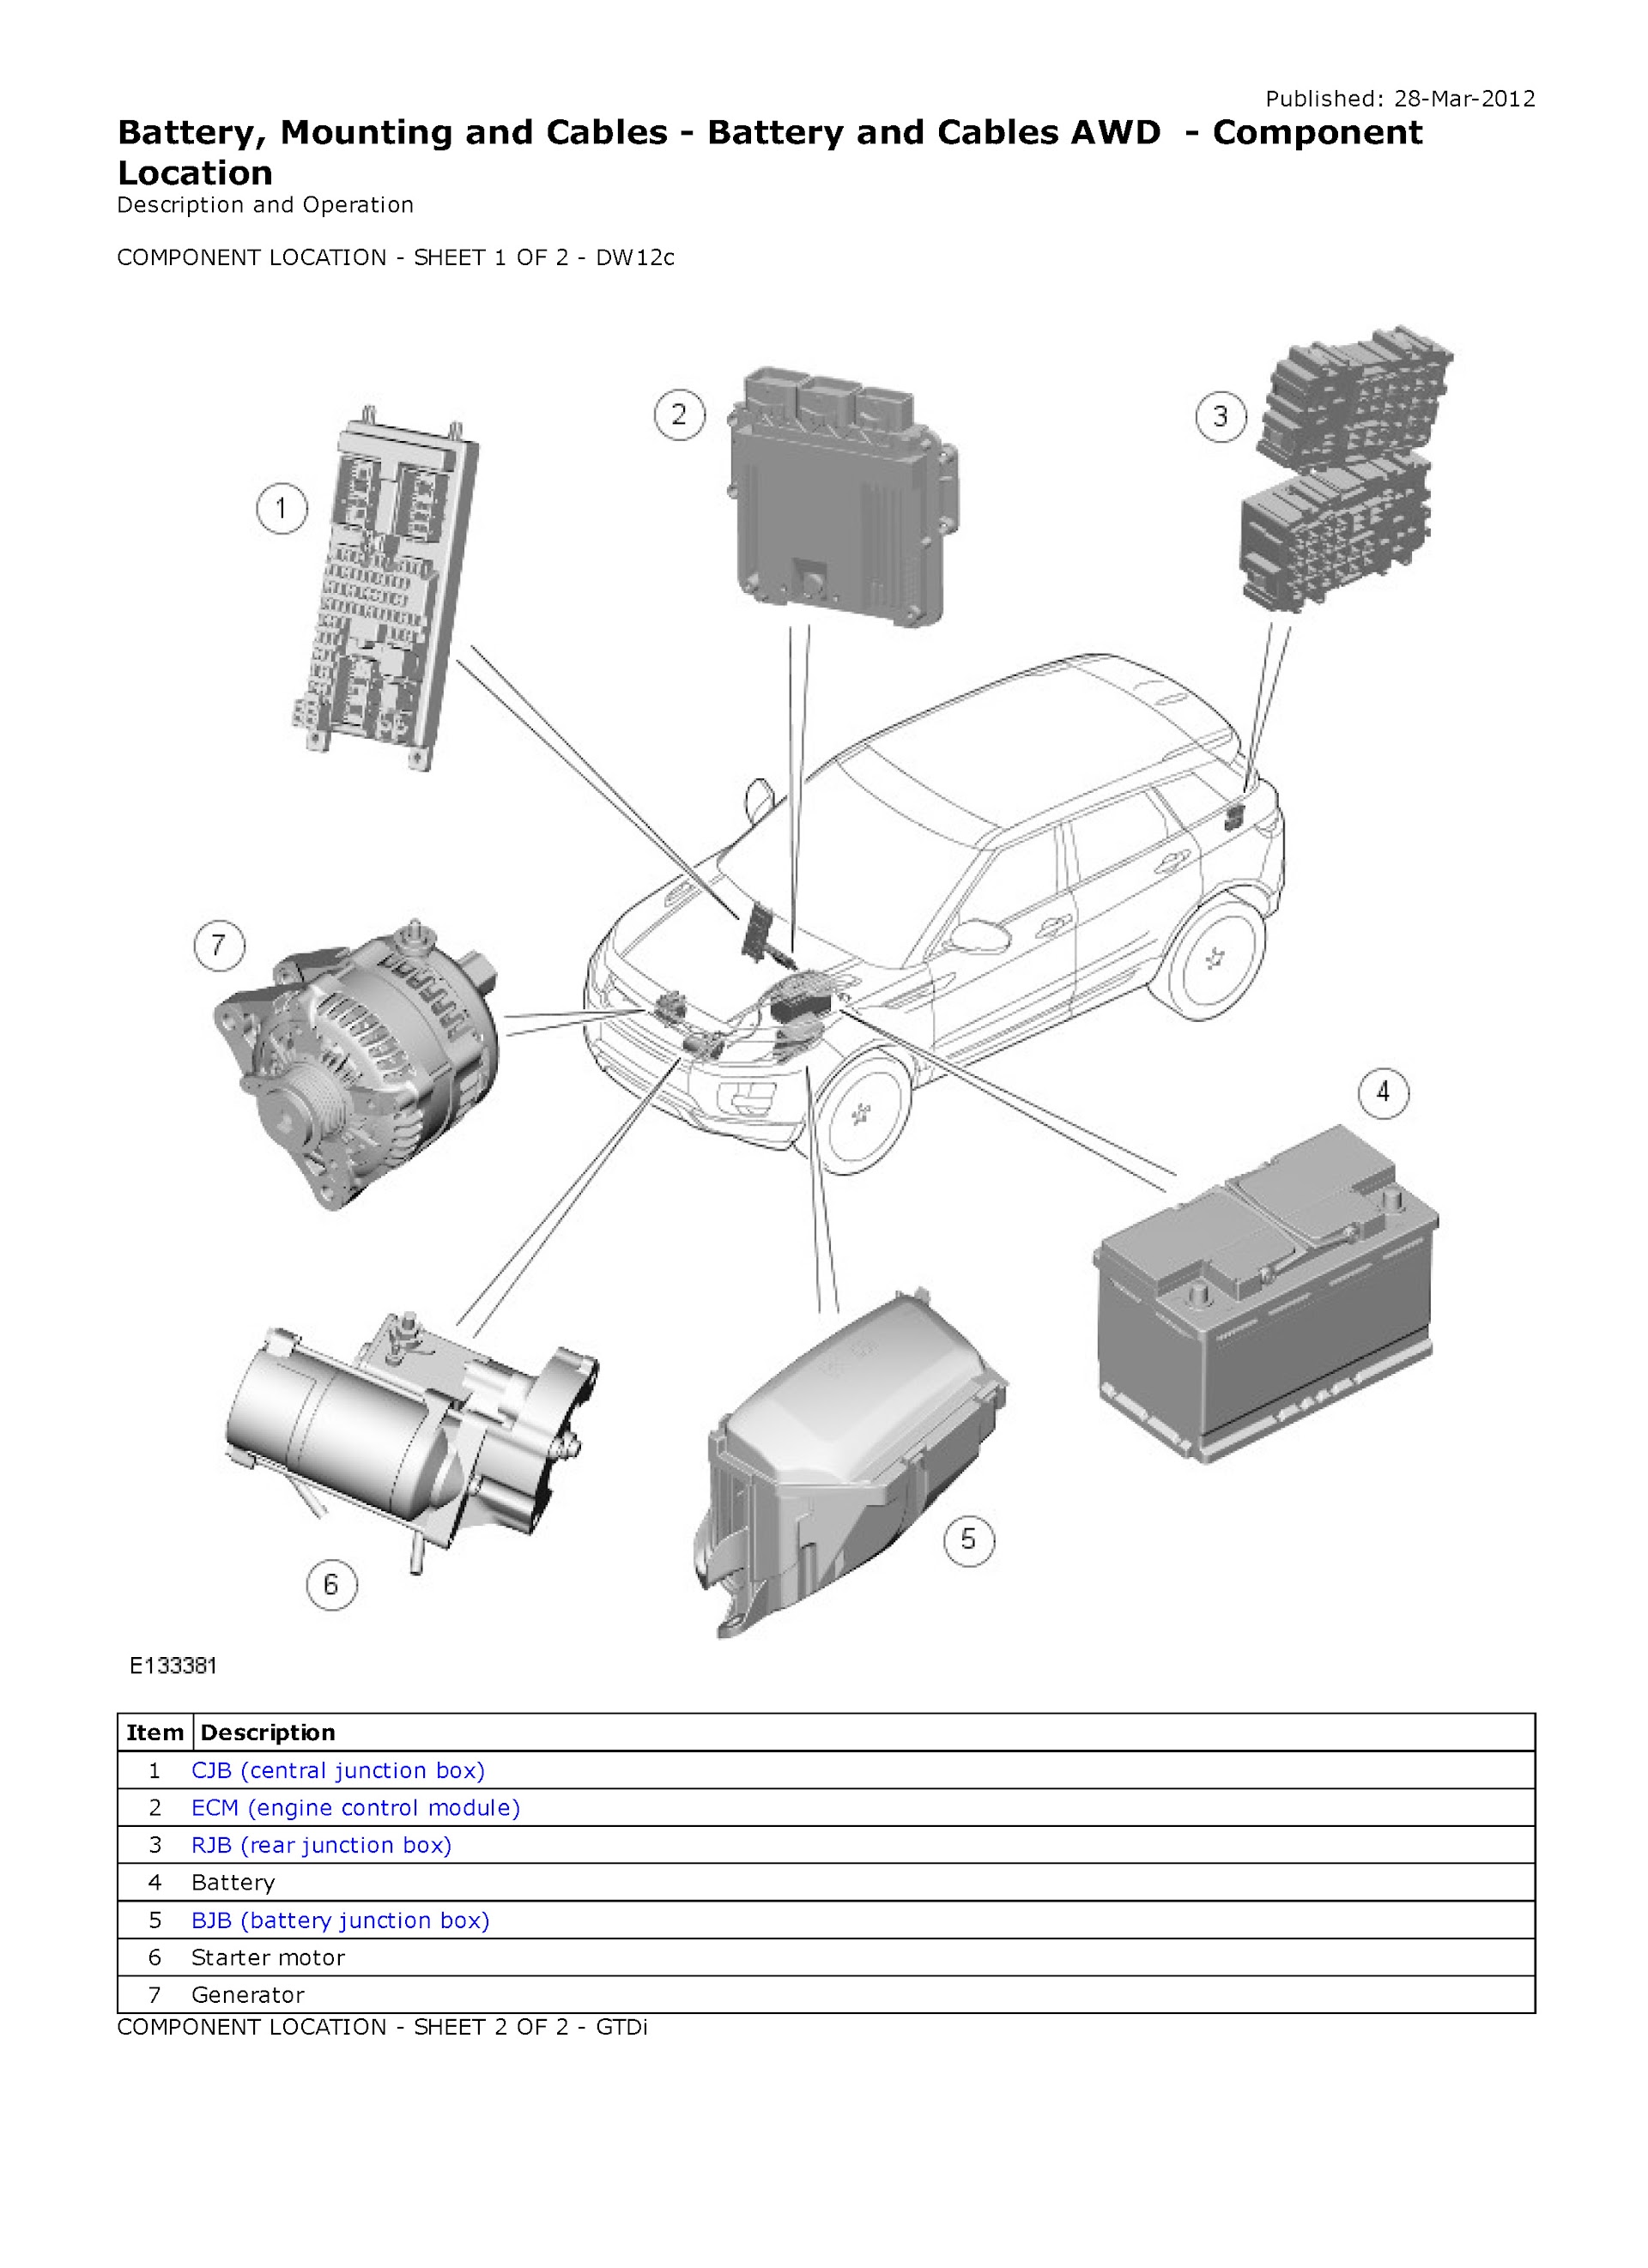 Download 2015 Range Rover Evoque Service Repair Manual